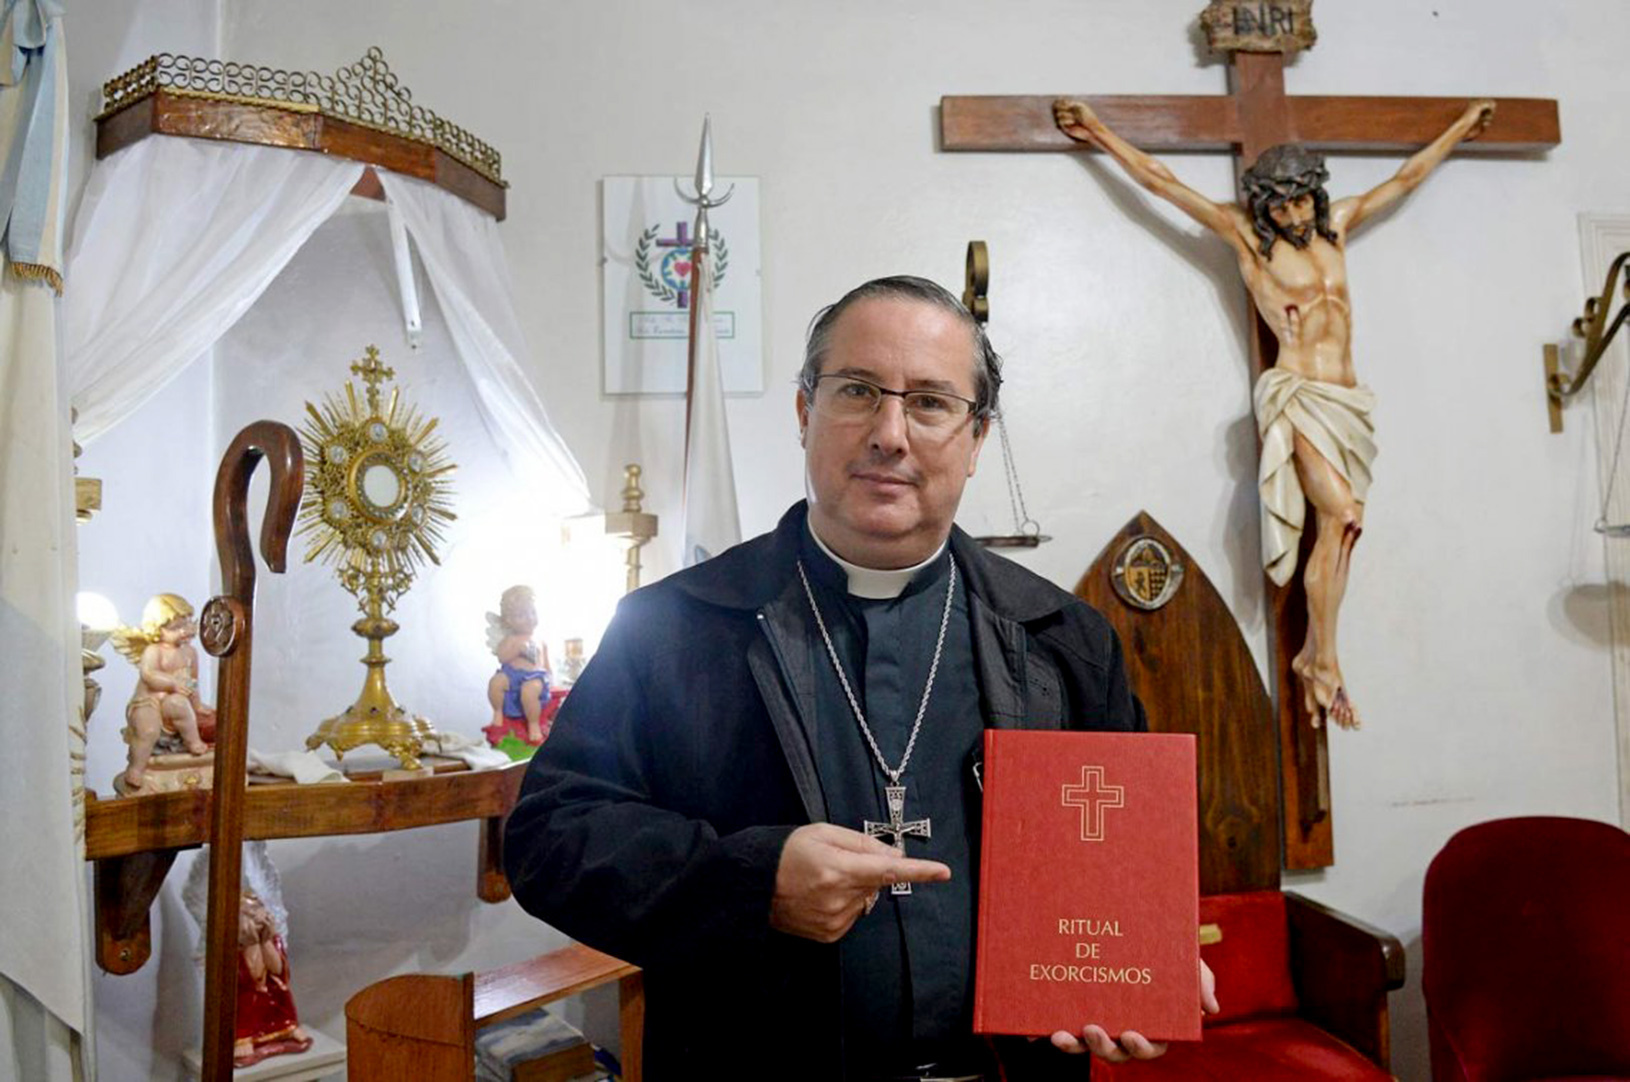 El padre obispo Manuel Adolfo Acuña